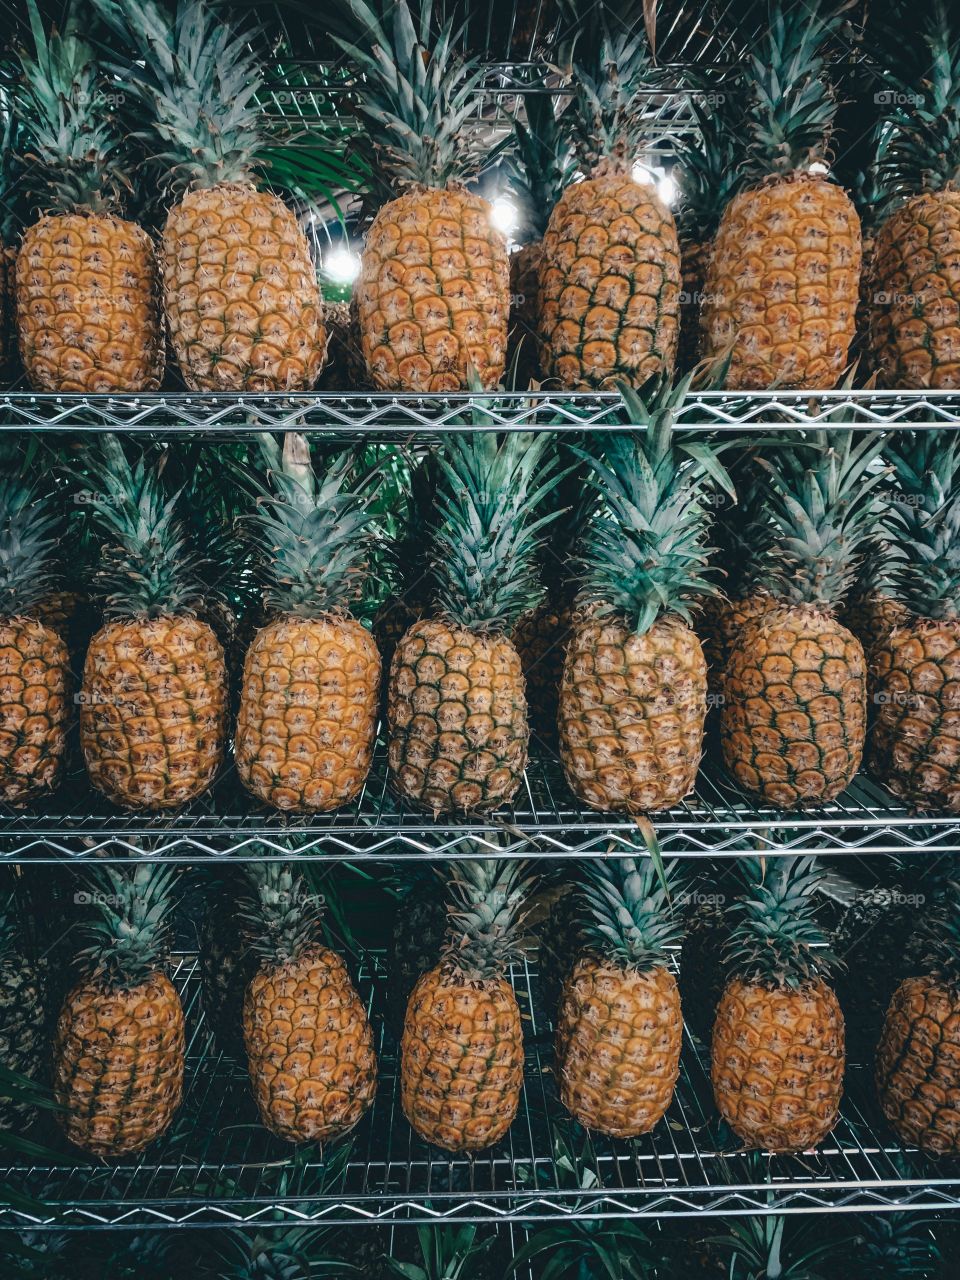 Fresh pineapple on the shelf awaits buyers in Hawaii. 